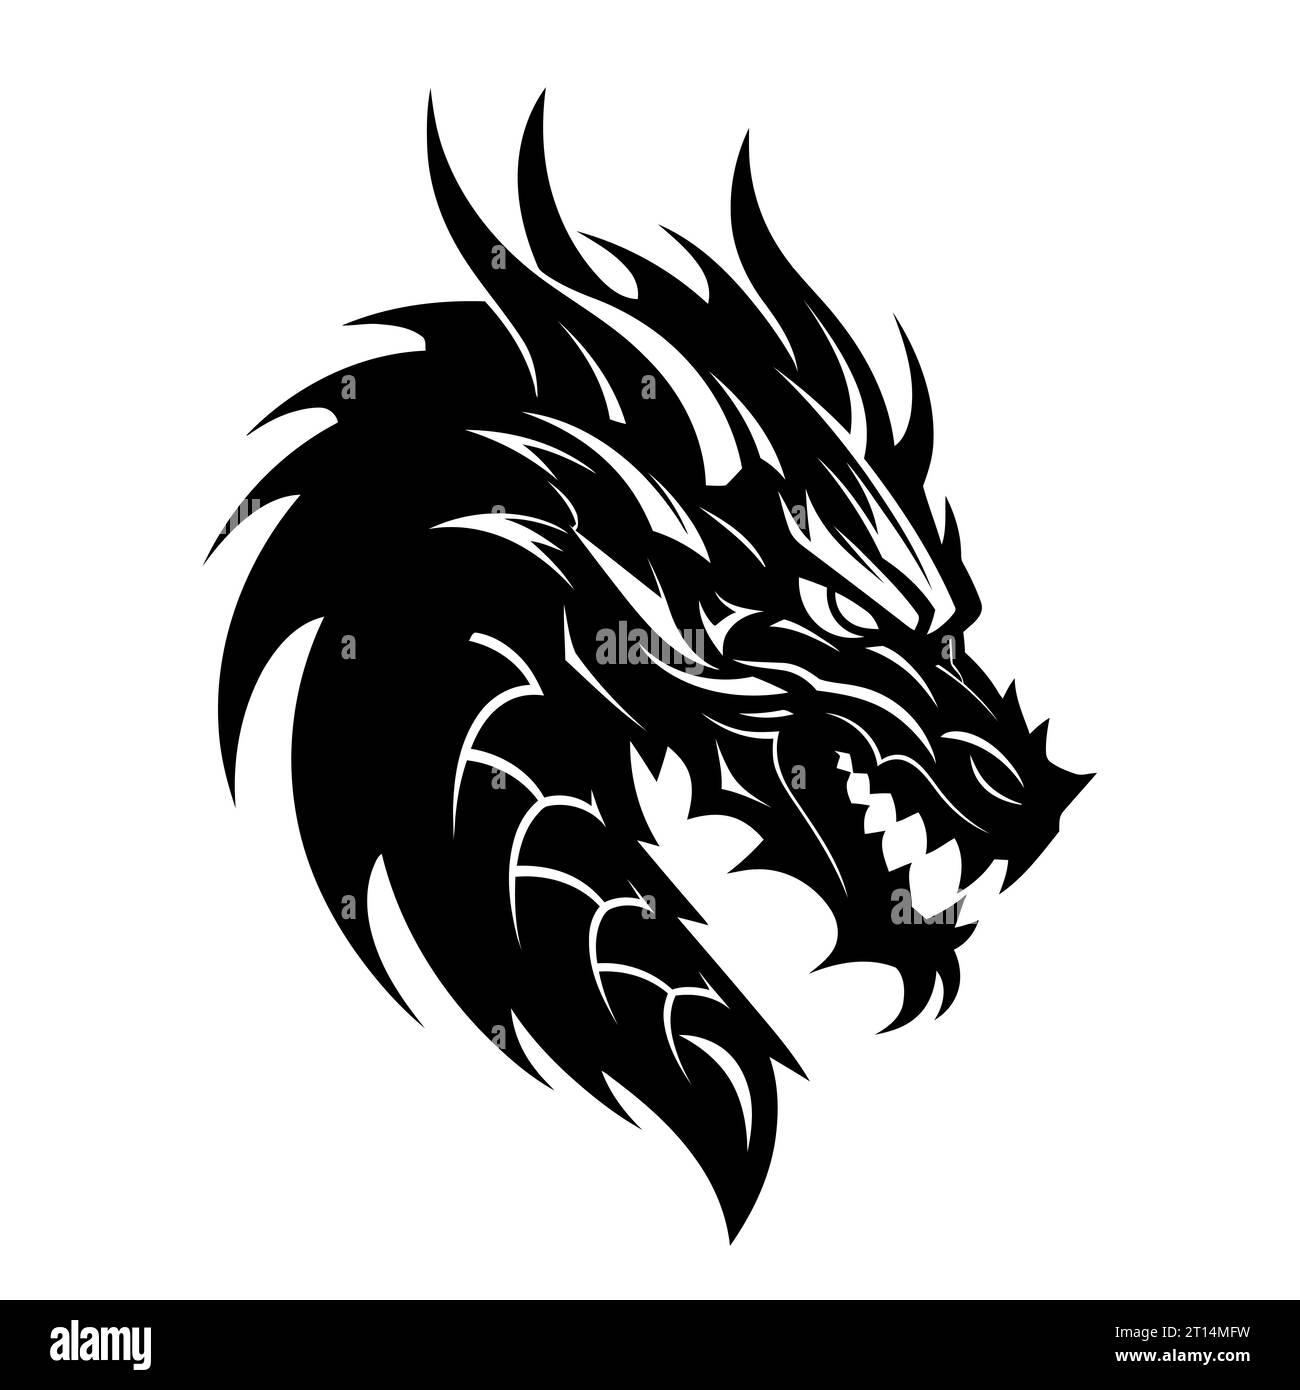 Dragon head silhouette. Dragon logo design. Black and white image of ...